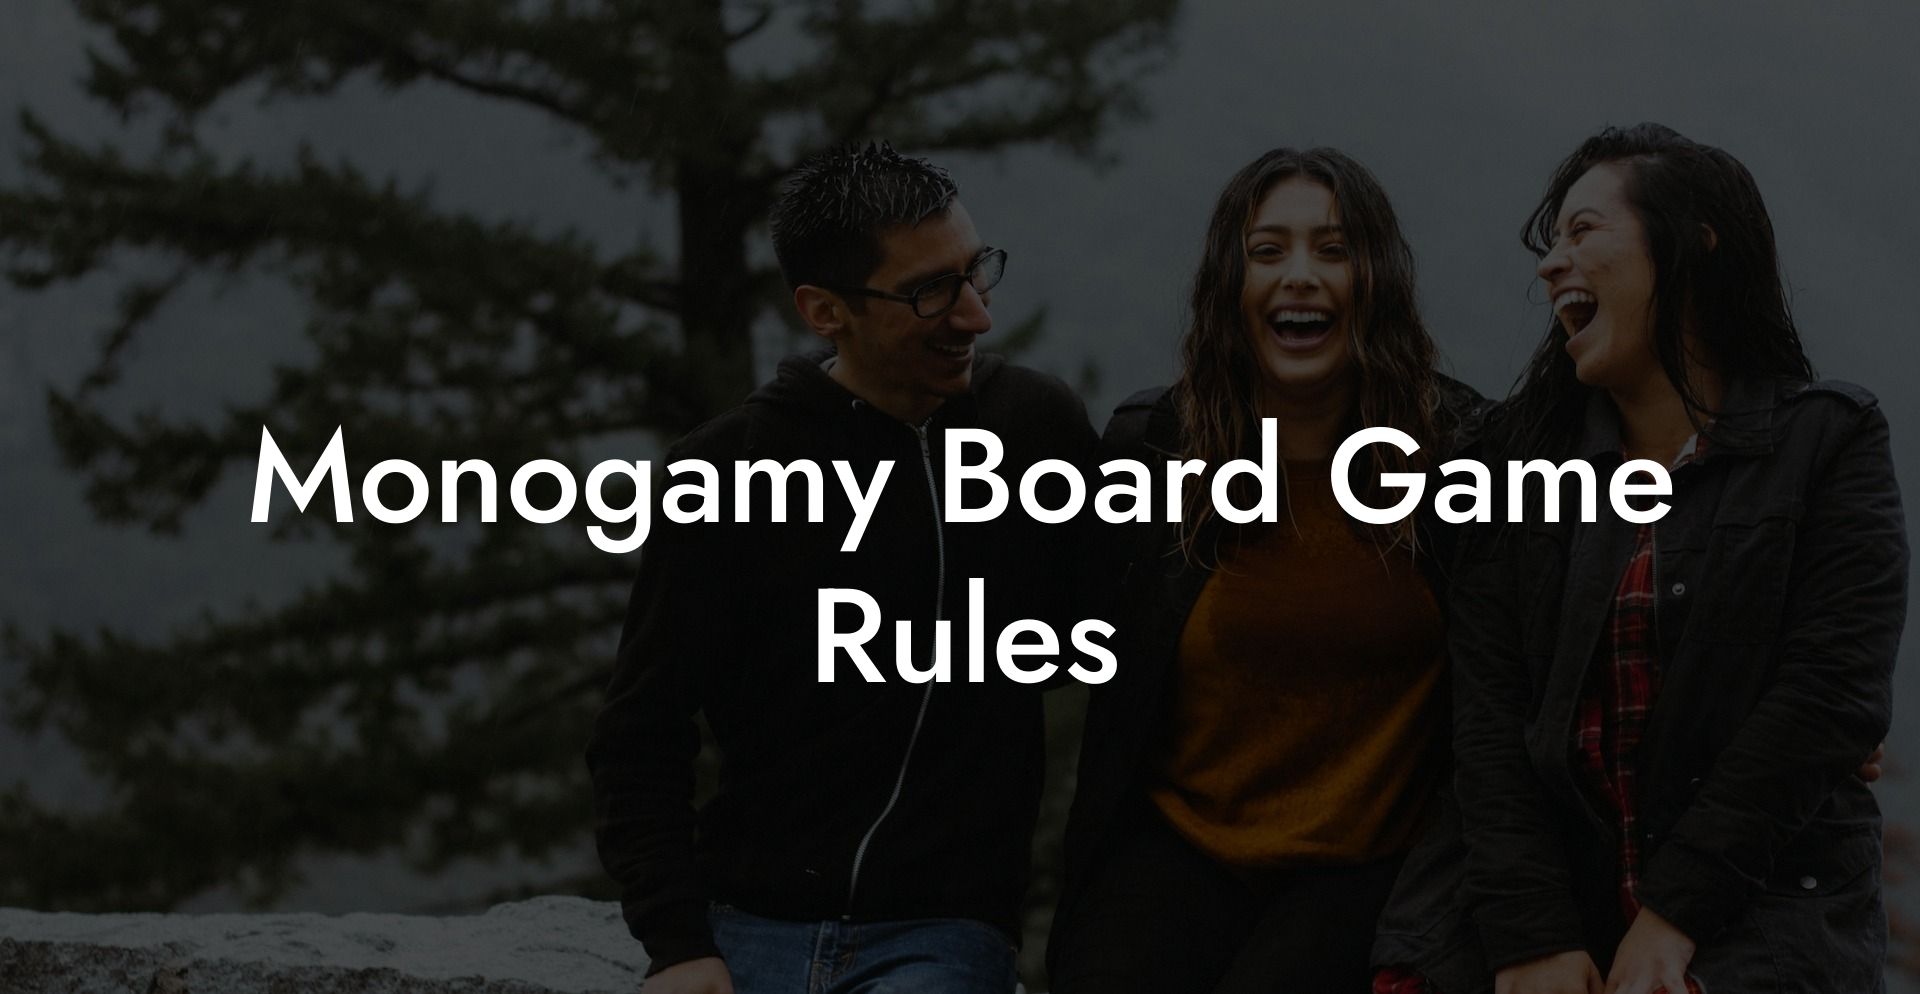 Monogamy Board Game Rules